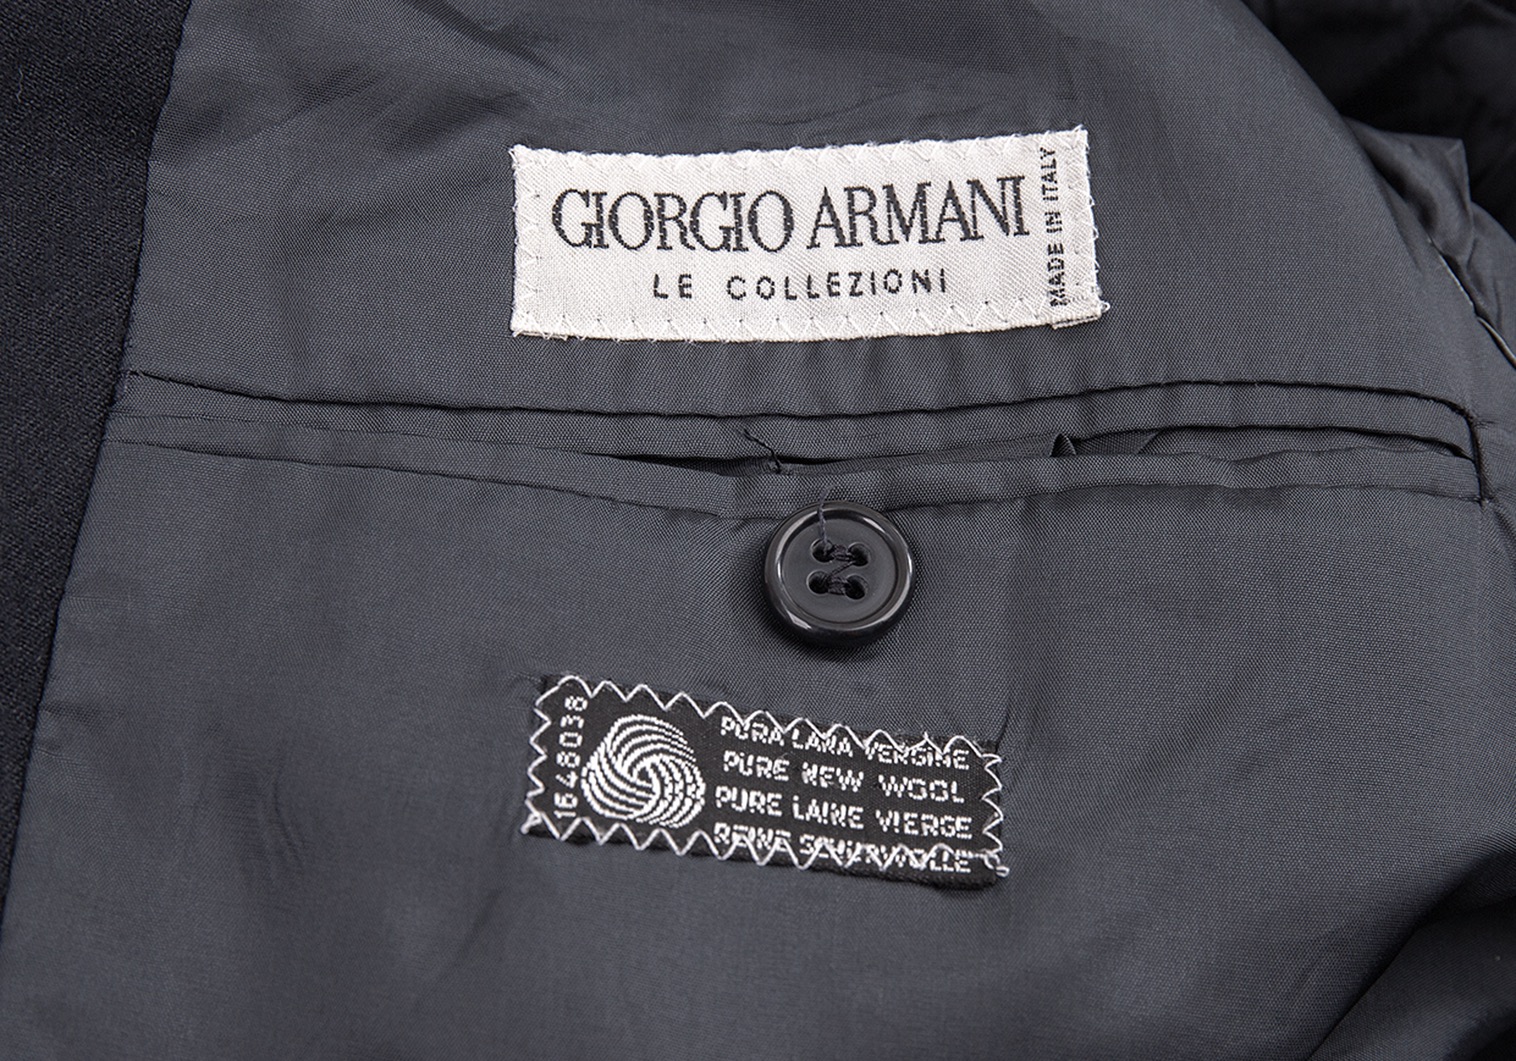 GIORGIO ARMANI デニム パンツ ベロア 黒タグ 濃紺 50